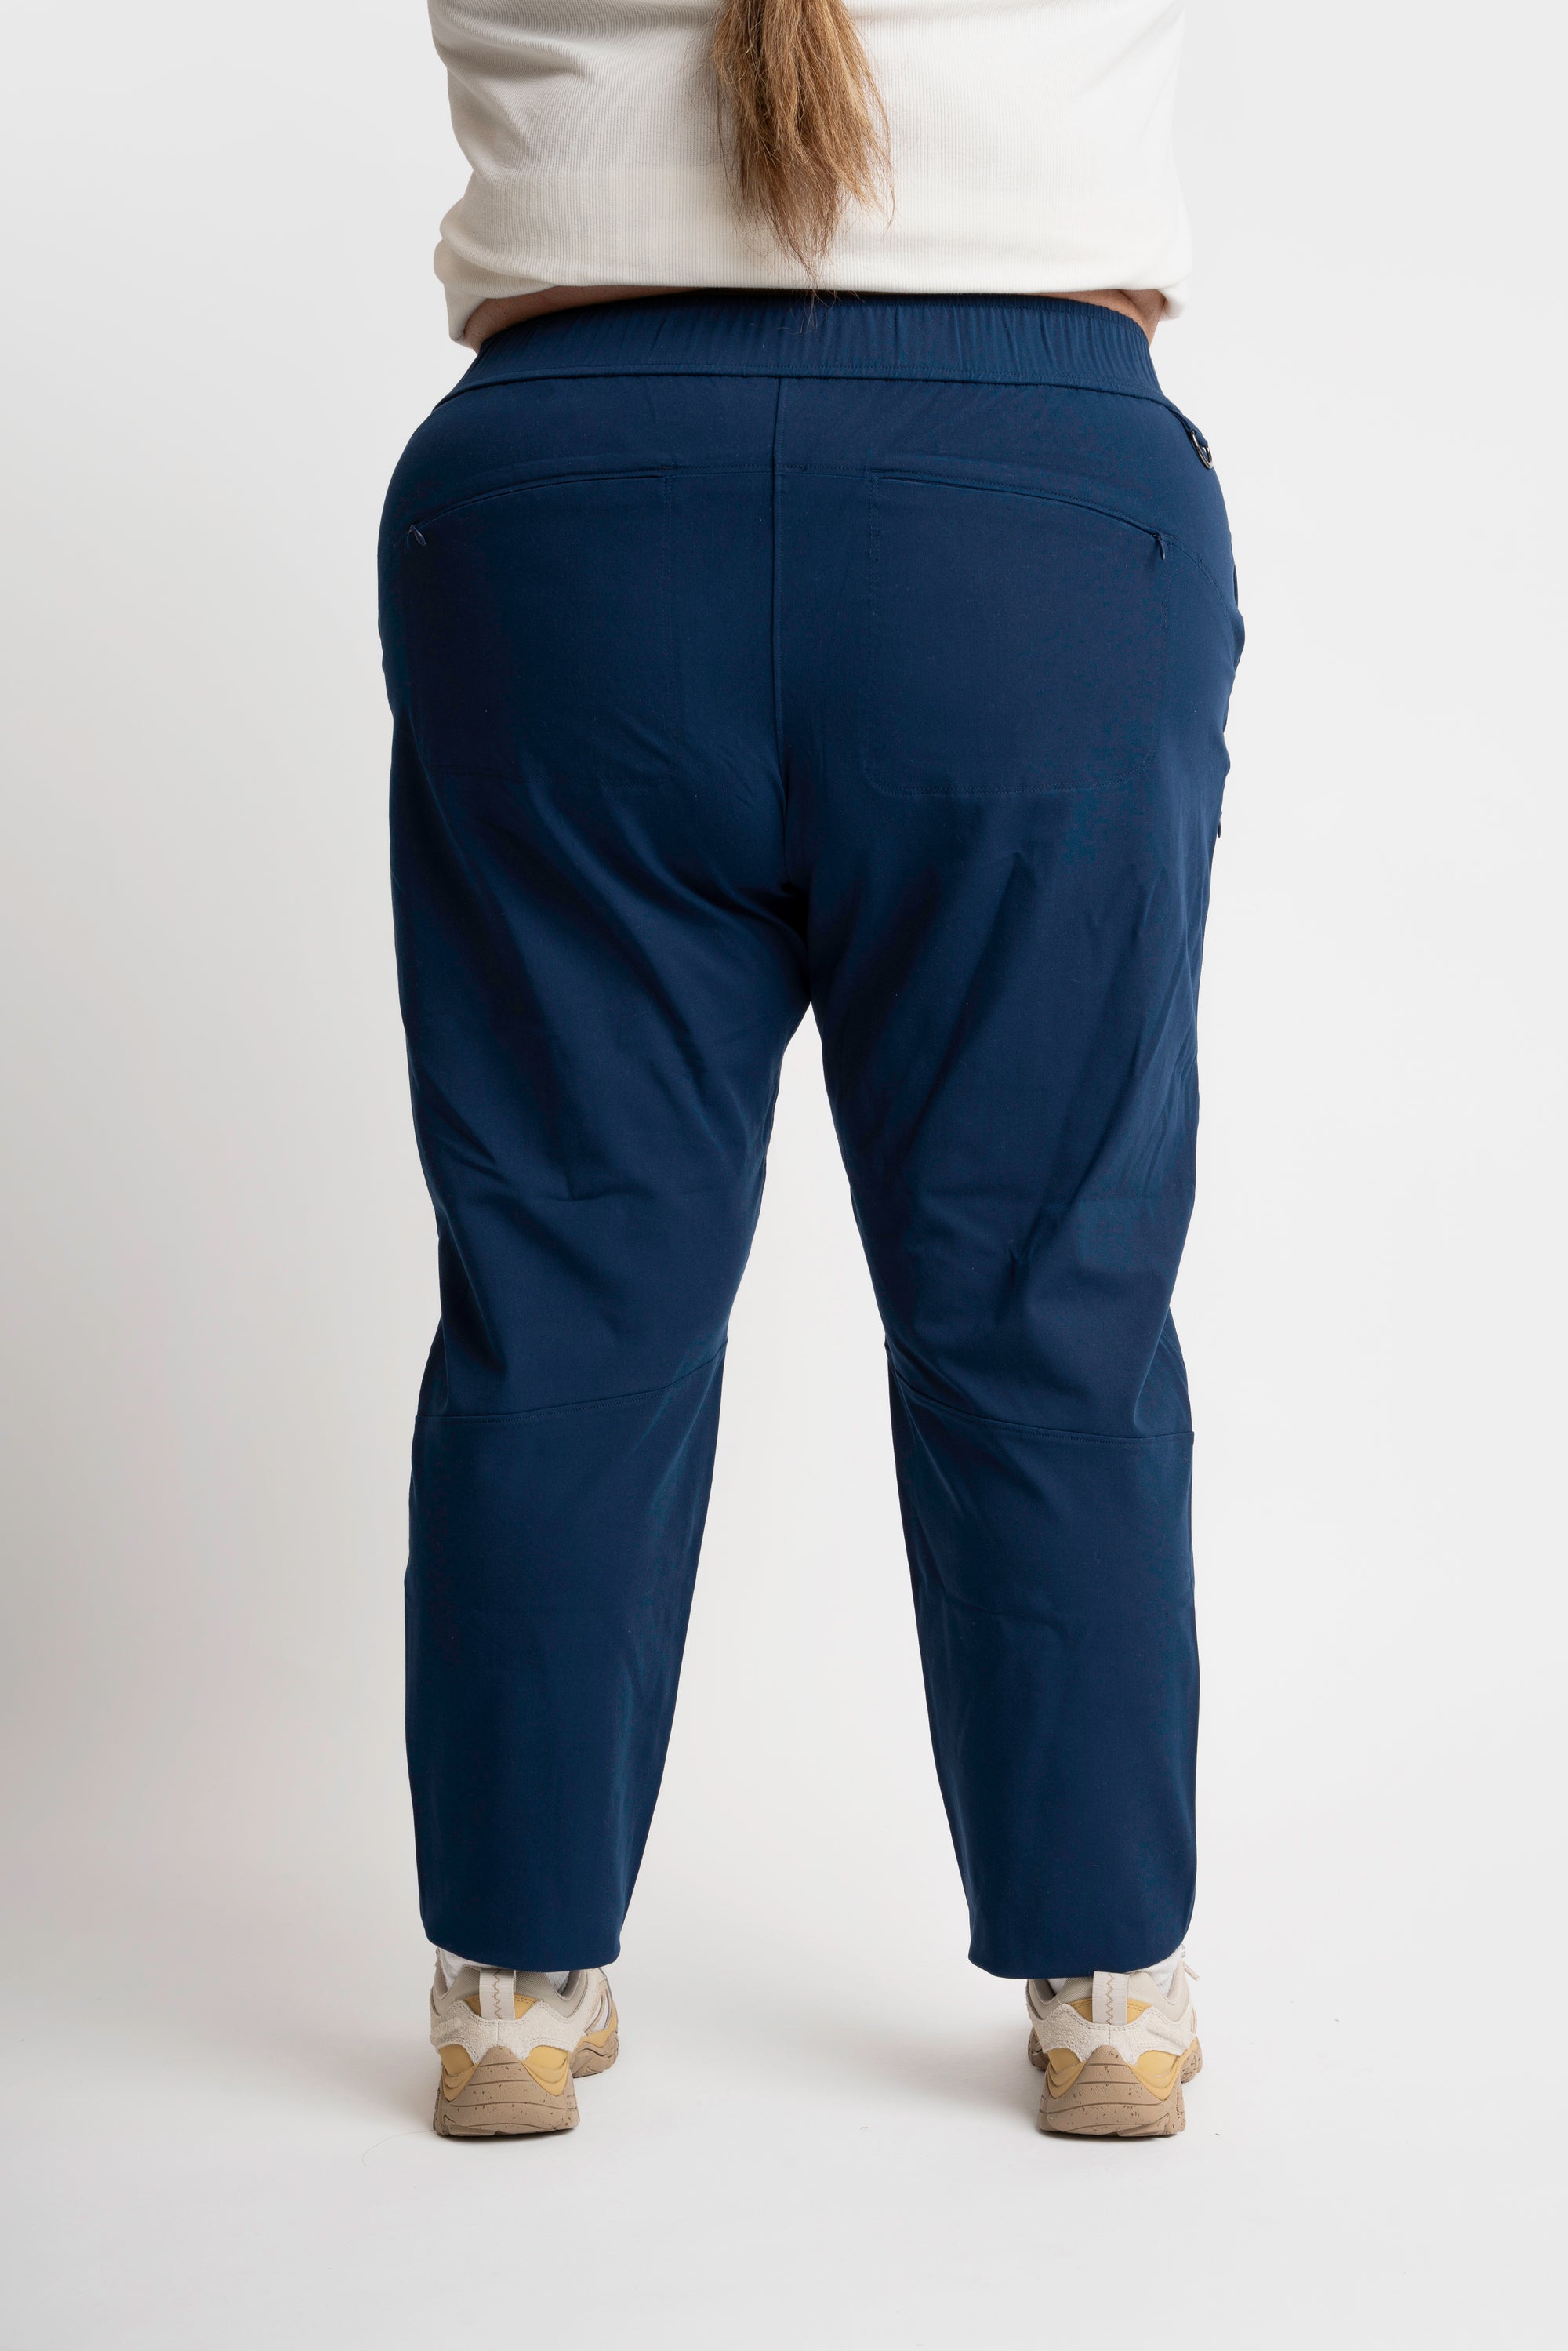 Open air pants  Ultra-flattering outdoor pants for women by alder